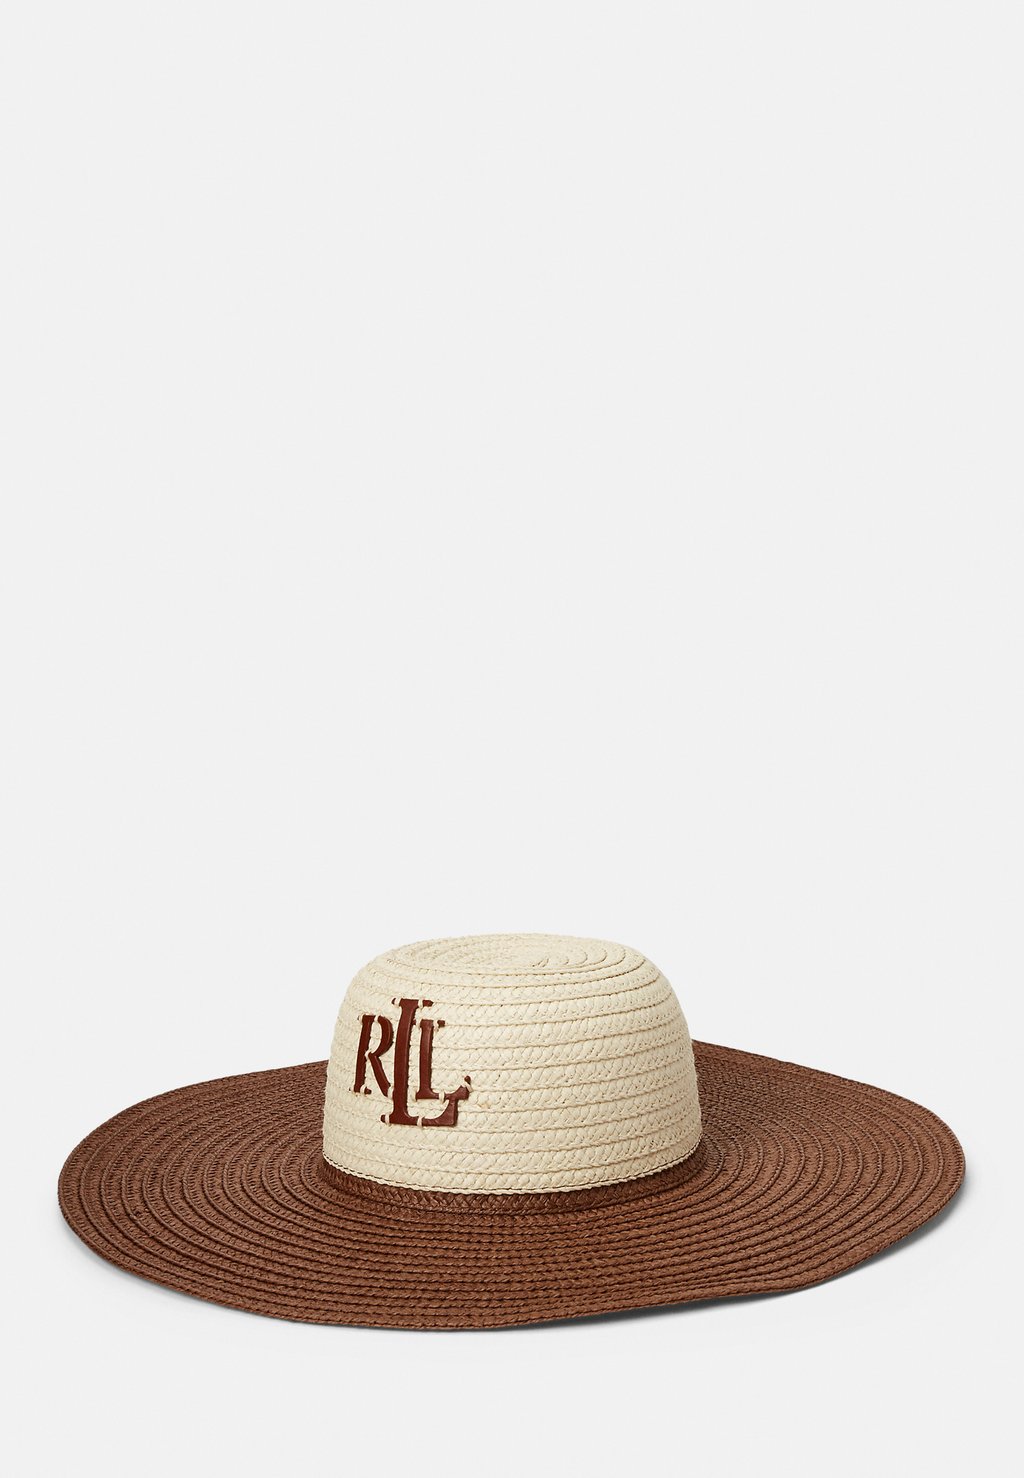 Шляпа Lauren Ralph Lauren SUN HAT, натуральный/дк натуральный